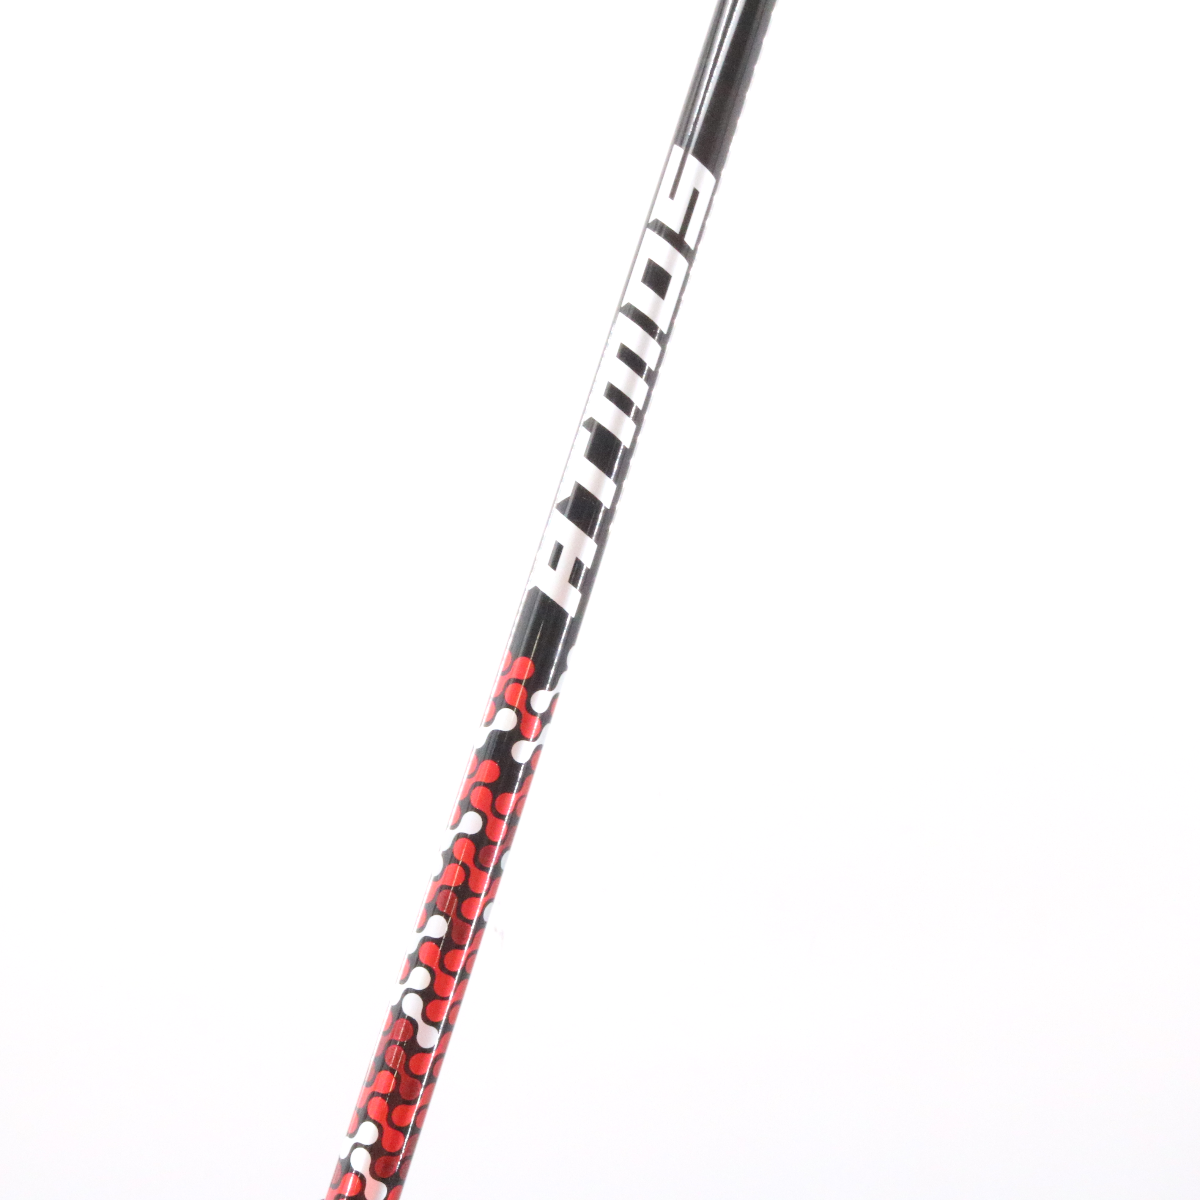 Fujikura Atmos Red Driver Graphite Shaft Senior TaylorMade Adapter Tip 59928A - Mr Topes Golf